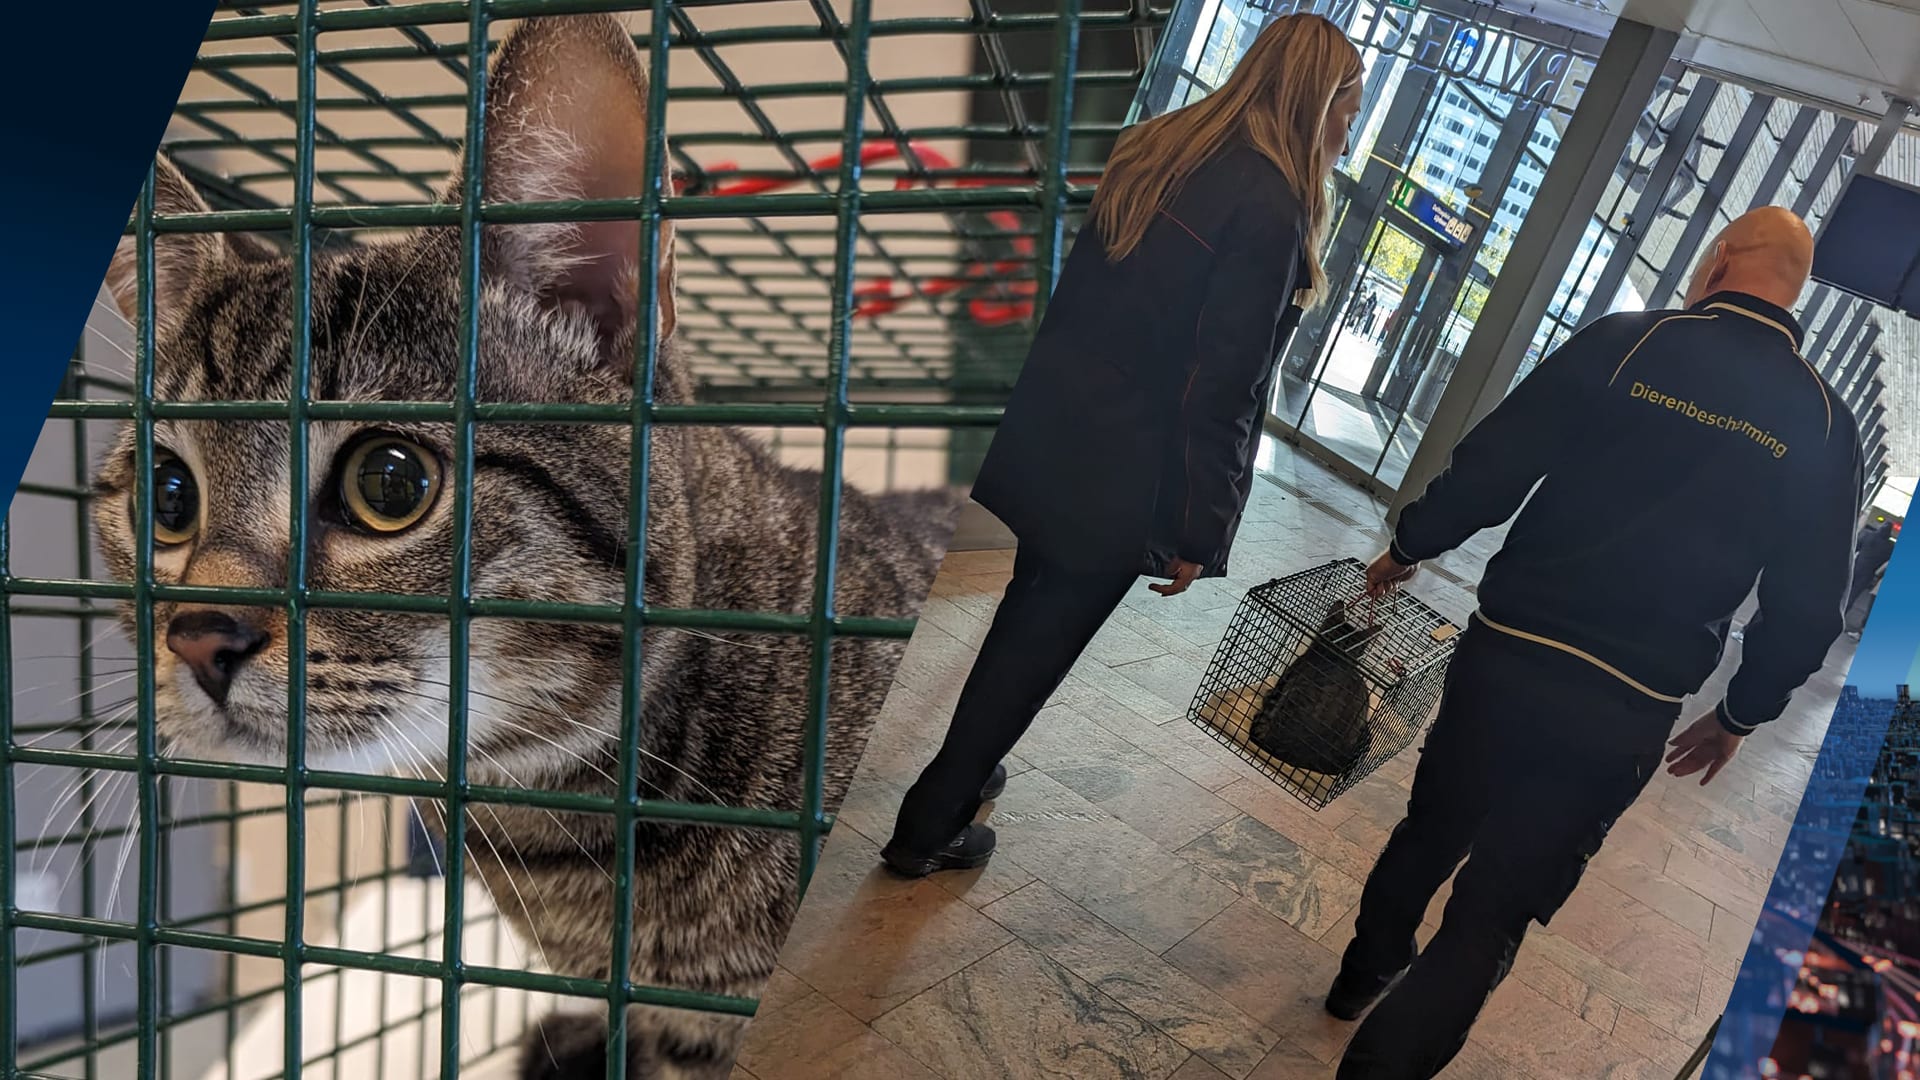 Kat achtergelaten in reistas op station Rotterdam Centraal